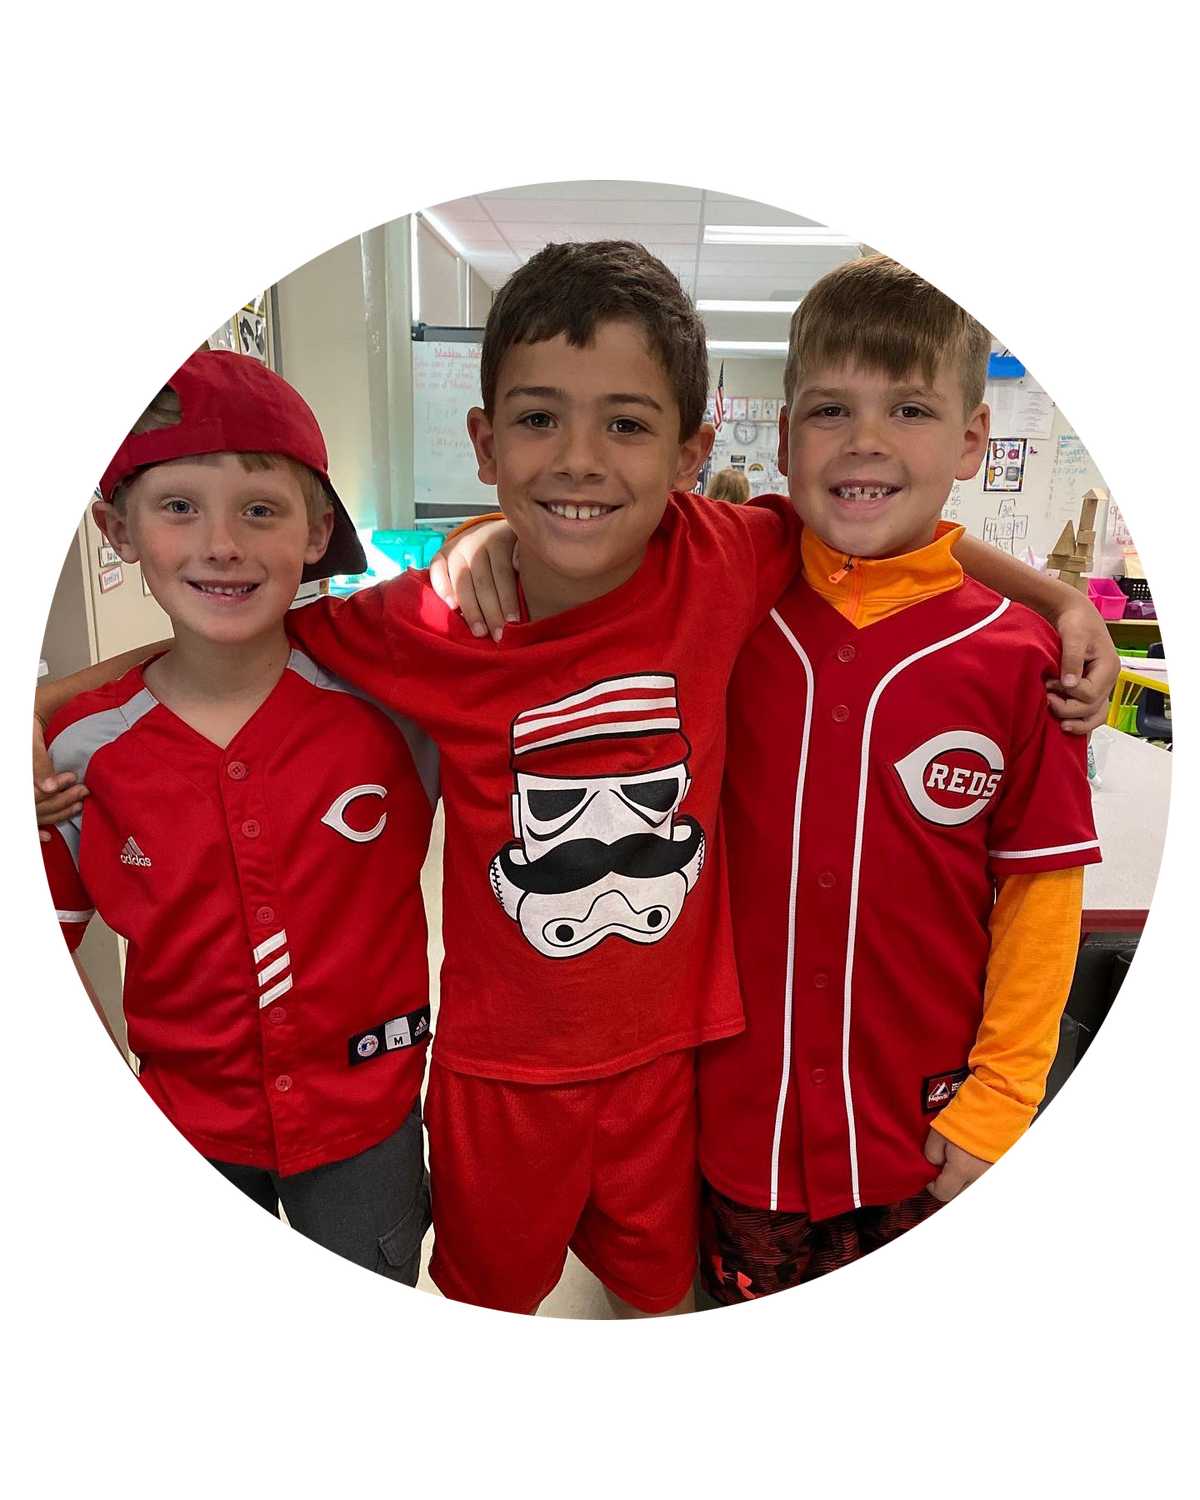 Three students wearing Cincinnati Reds shirts